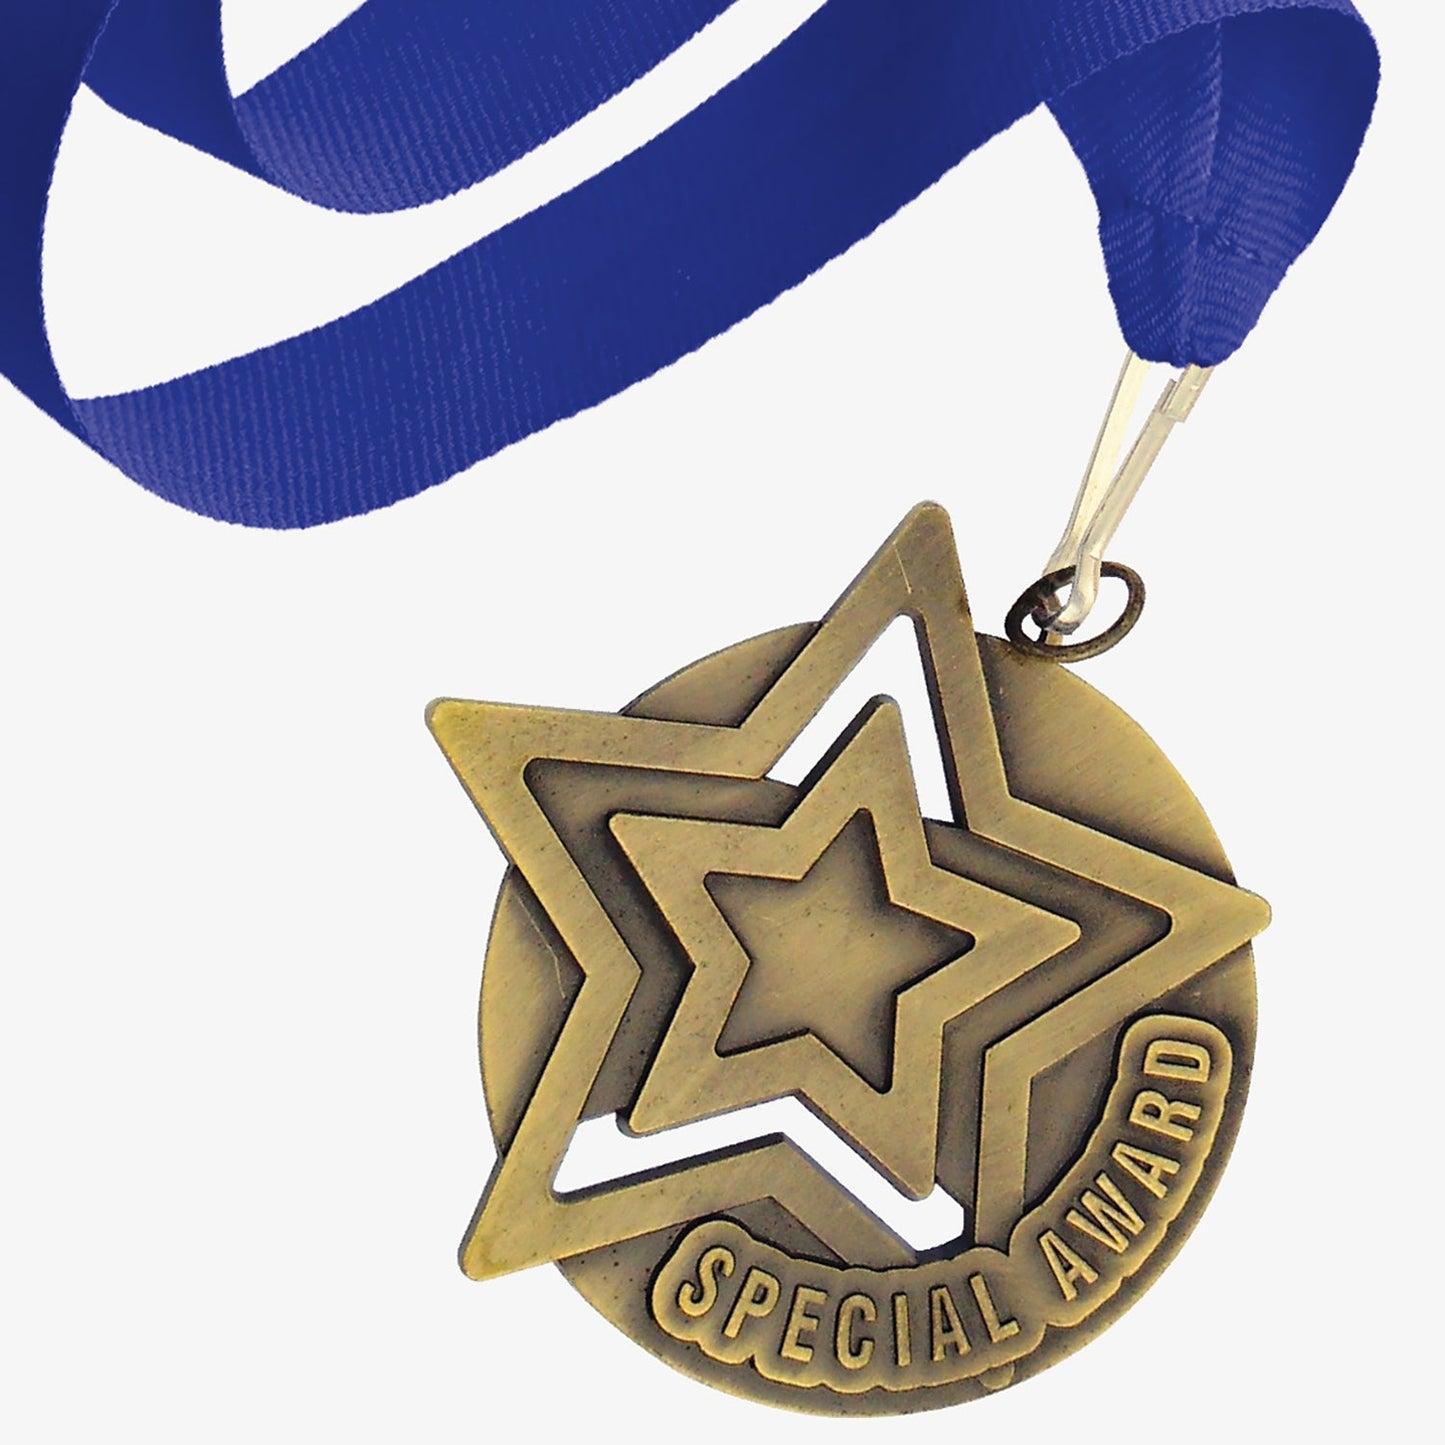 Special Award Medal - Gold